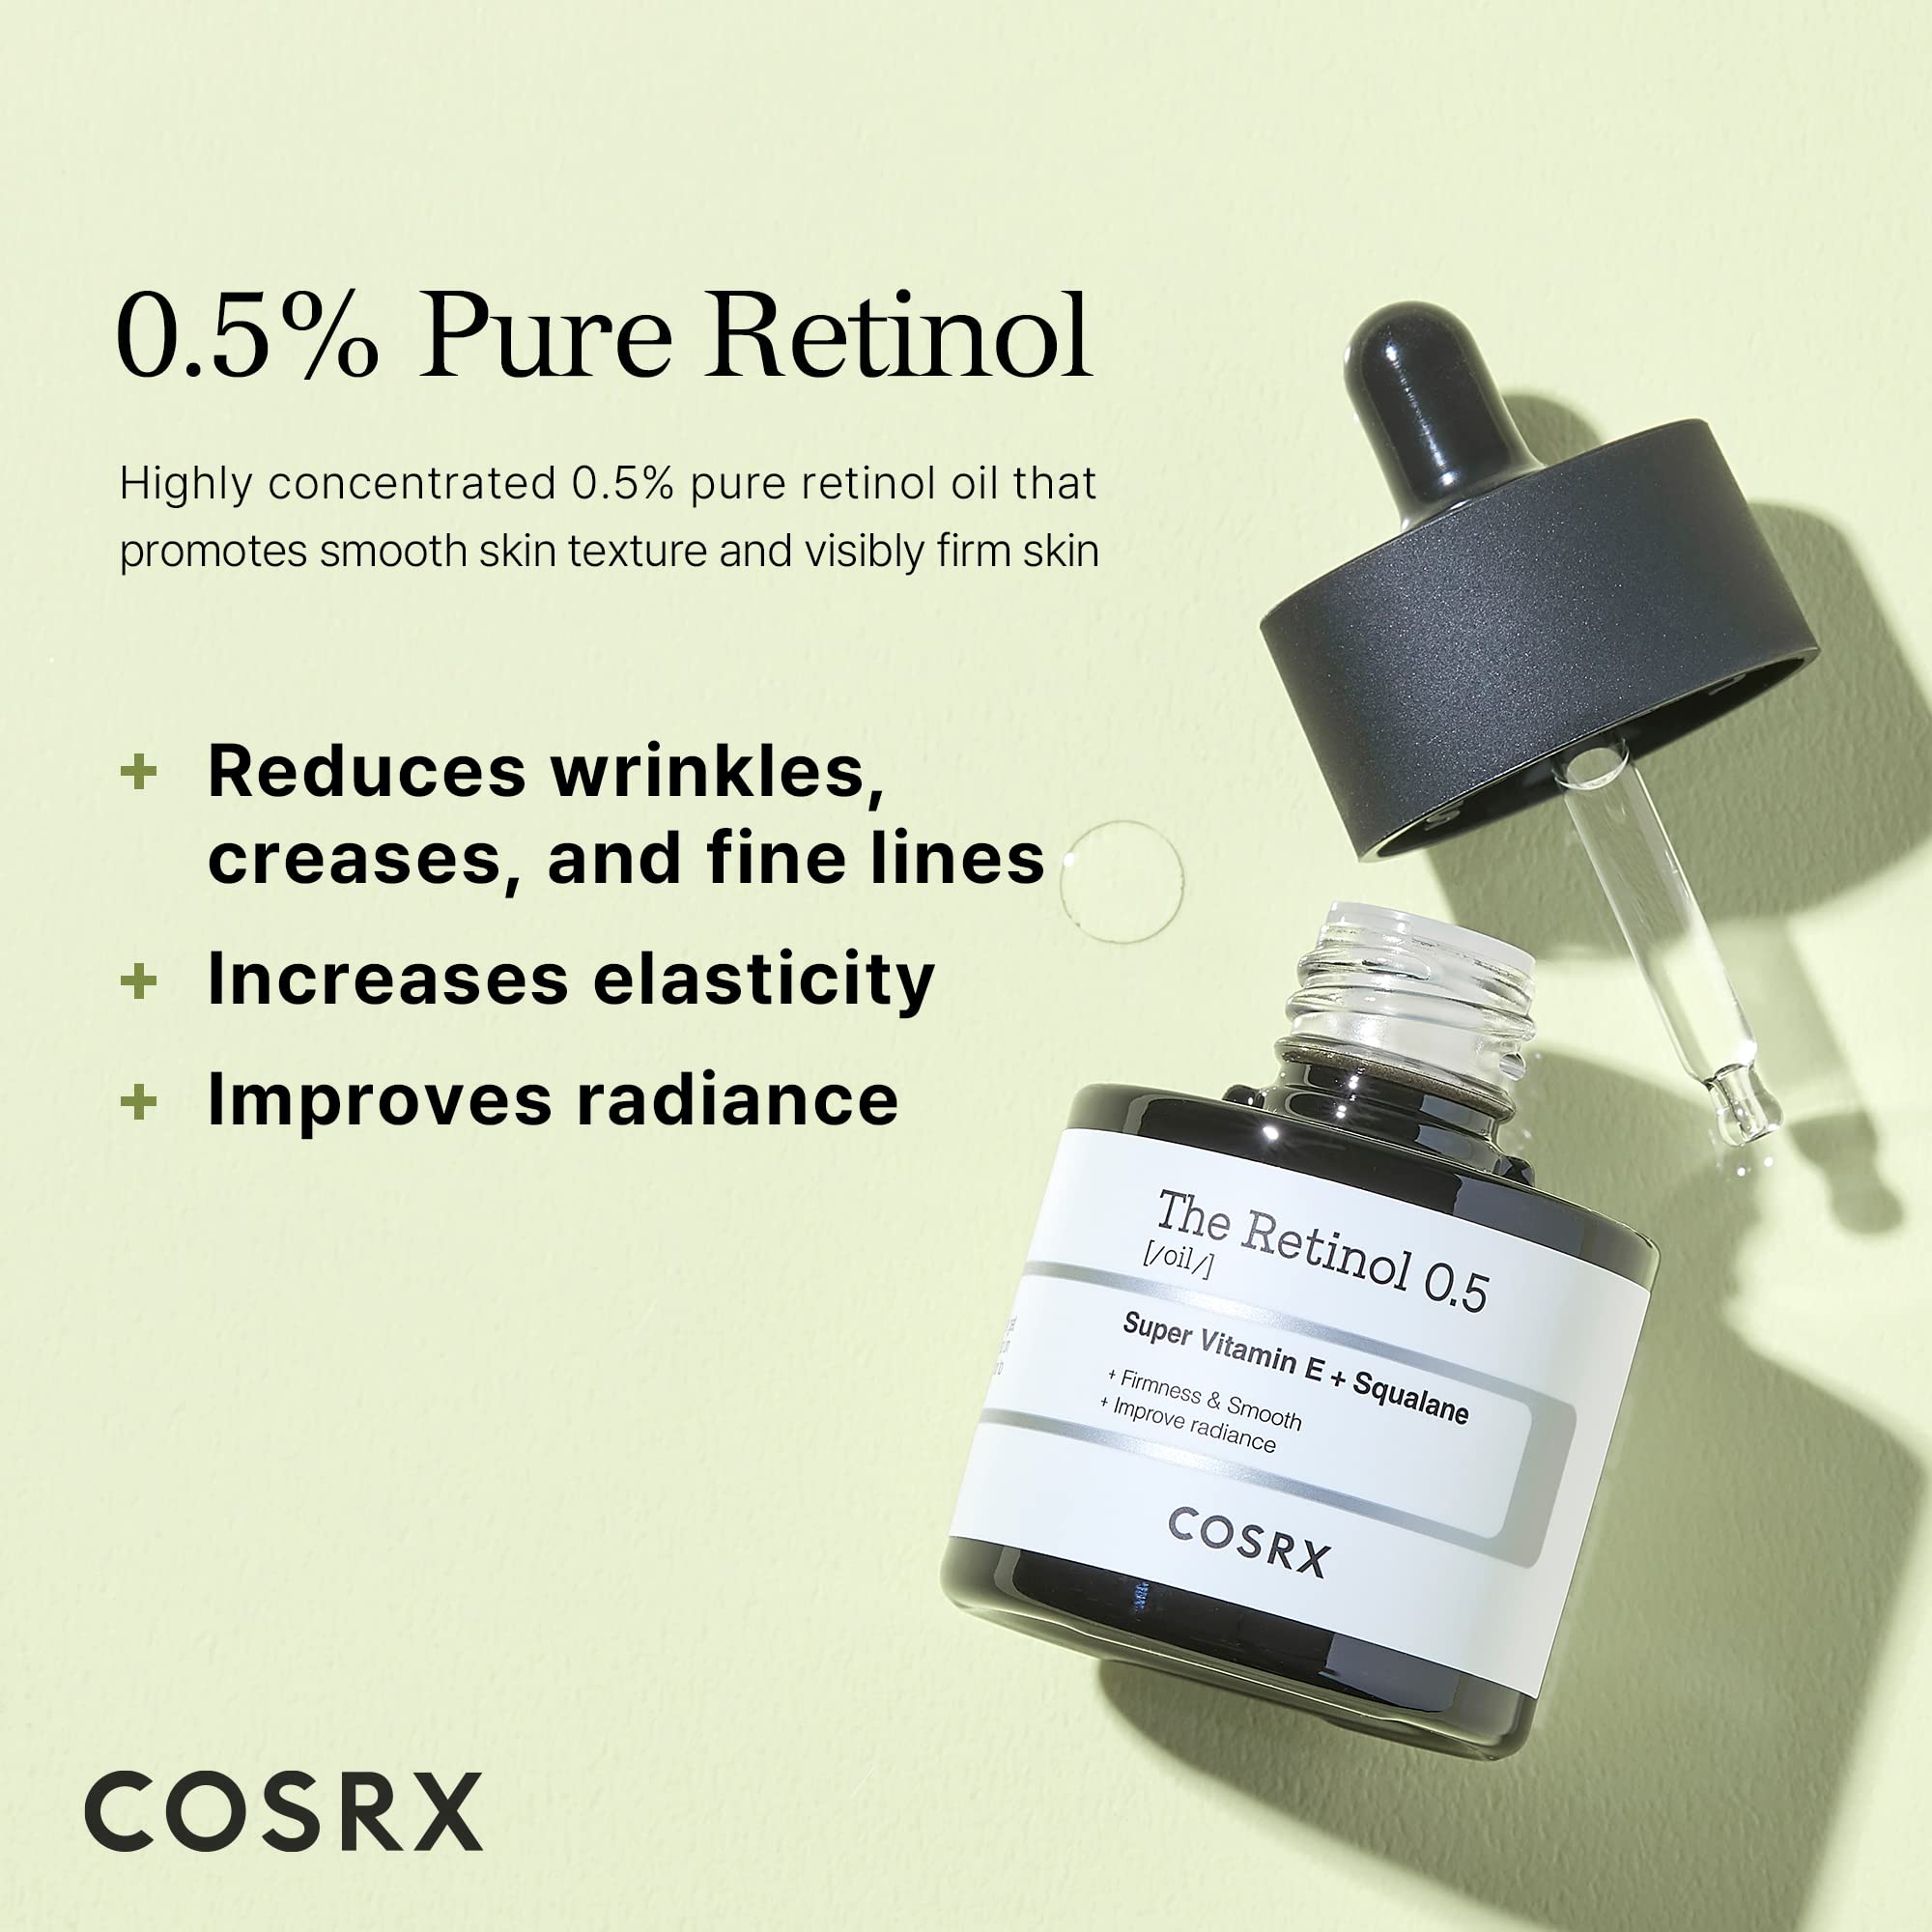 COSRX - The Retinol 0.5 Oil 20ml - سيروم زيت الريتينول 0.5 من كوس آر اكس